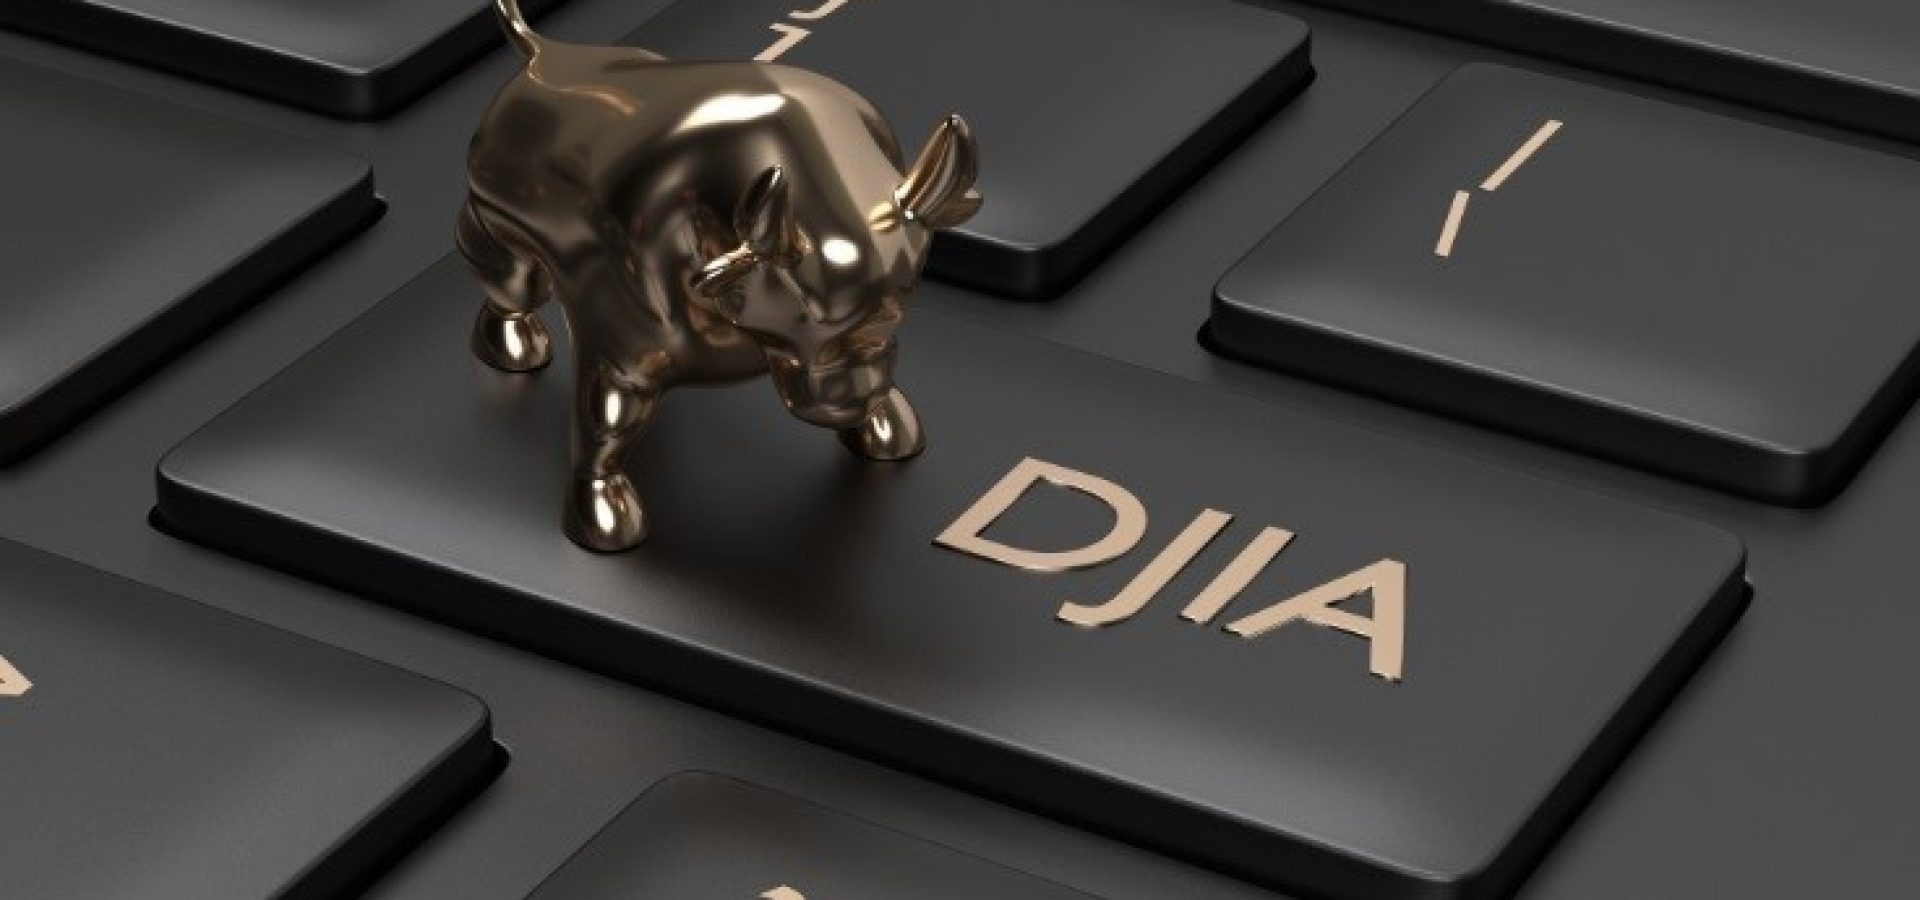 DJIA on keyboard with miniature bull – WibestBroker